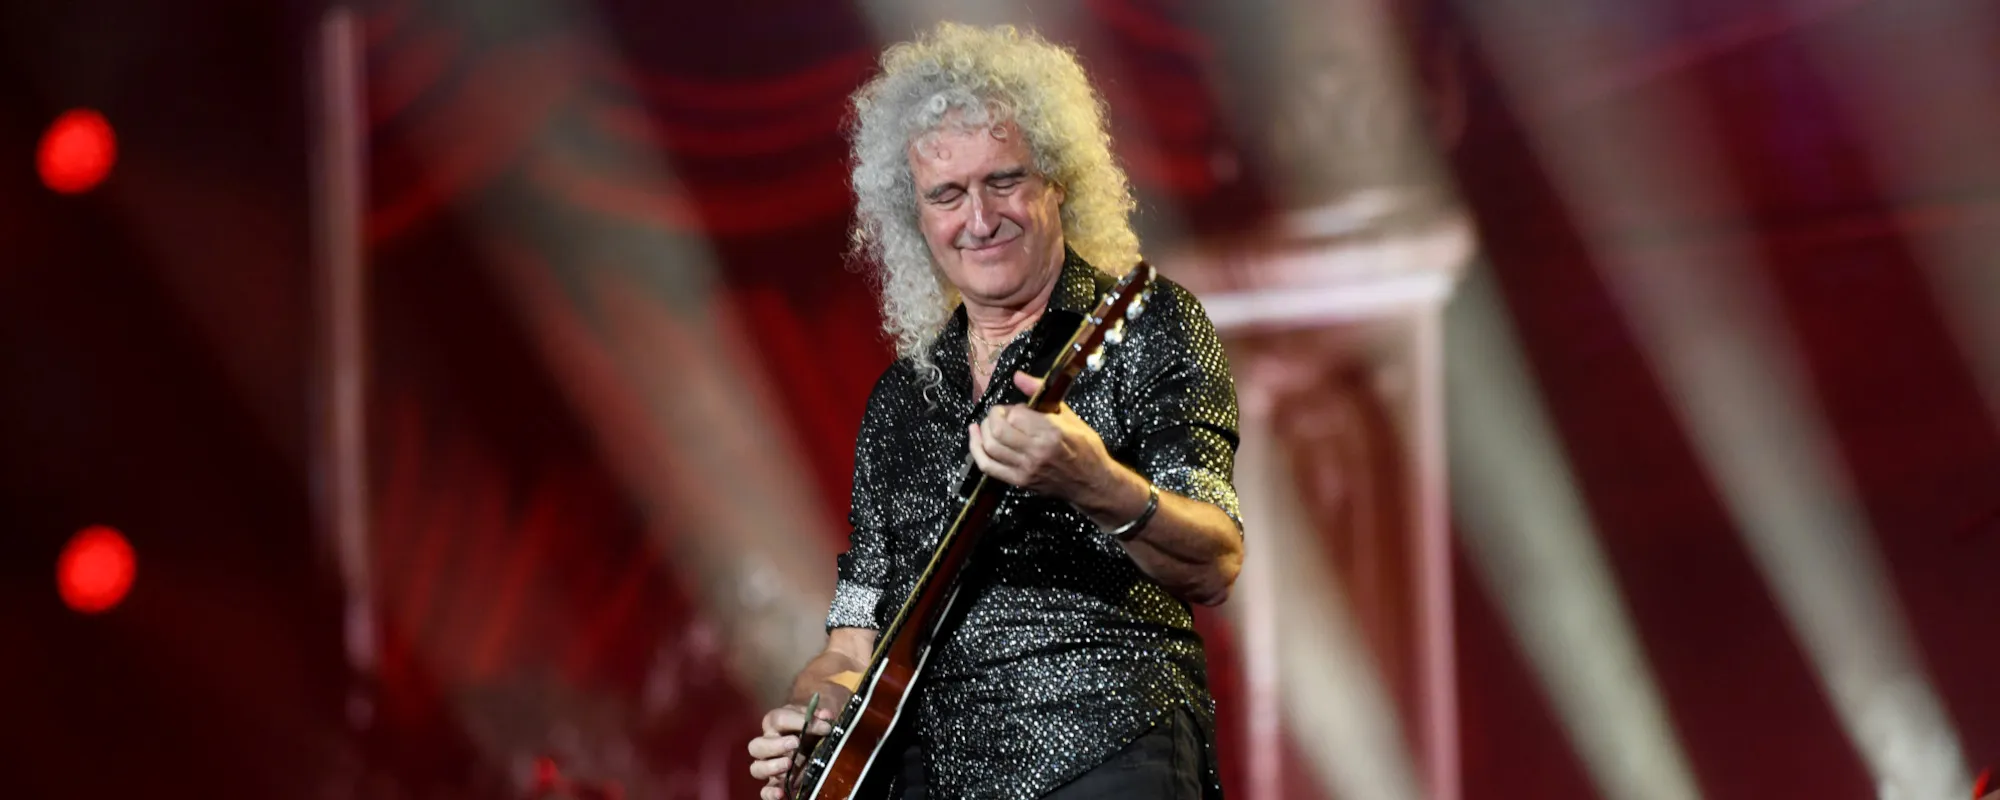 Brian May Marks 40th Anniversary of Star Fleet, Featuring Eddie Van Halen, with Box Set